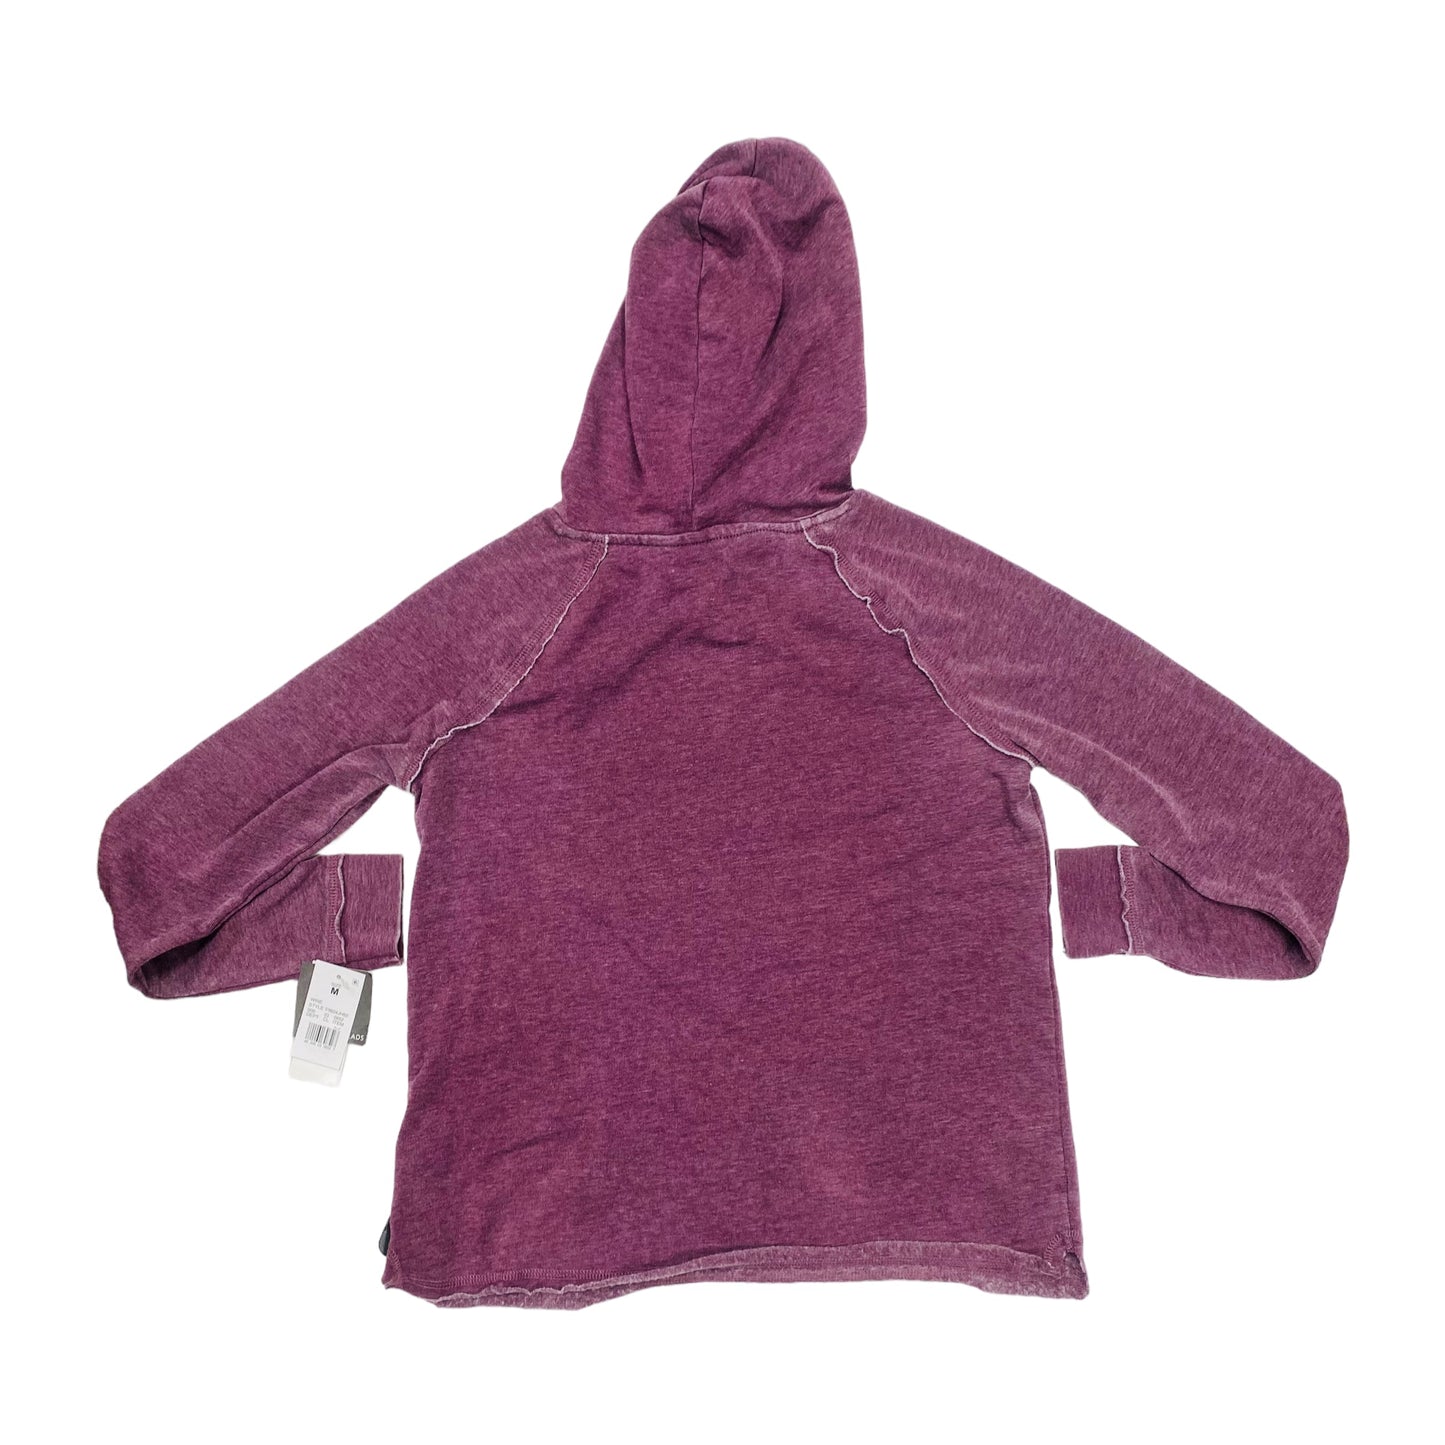 Sweatshirt Hoodie By Grayson Threads  Size: M